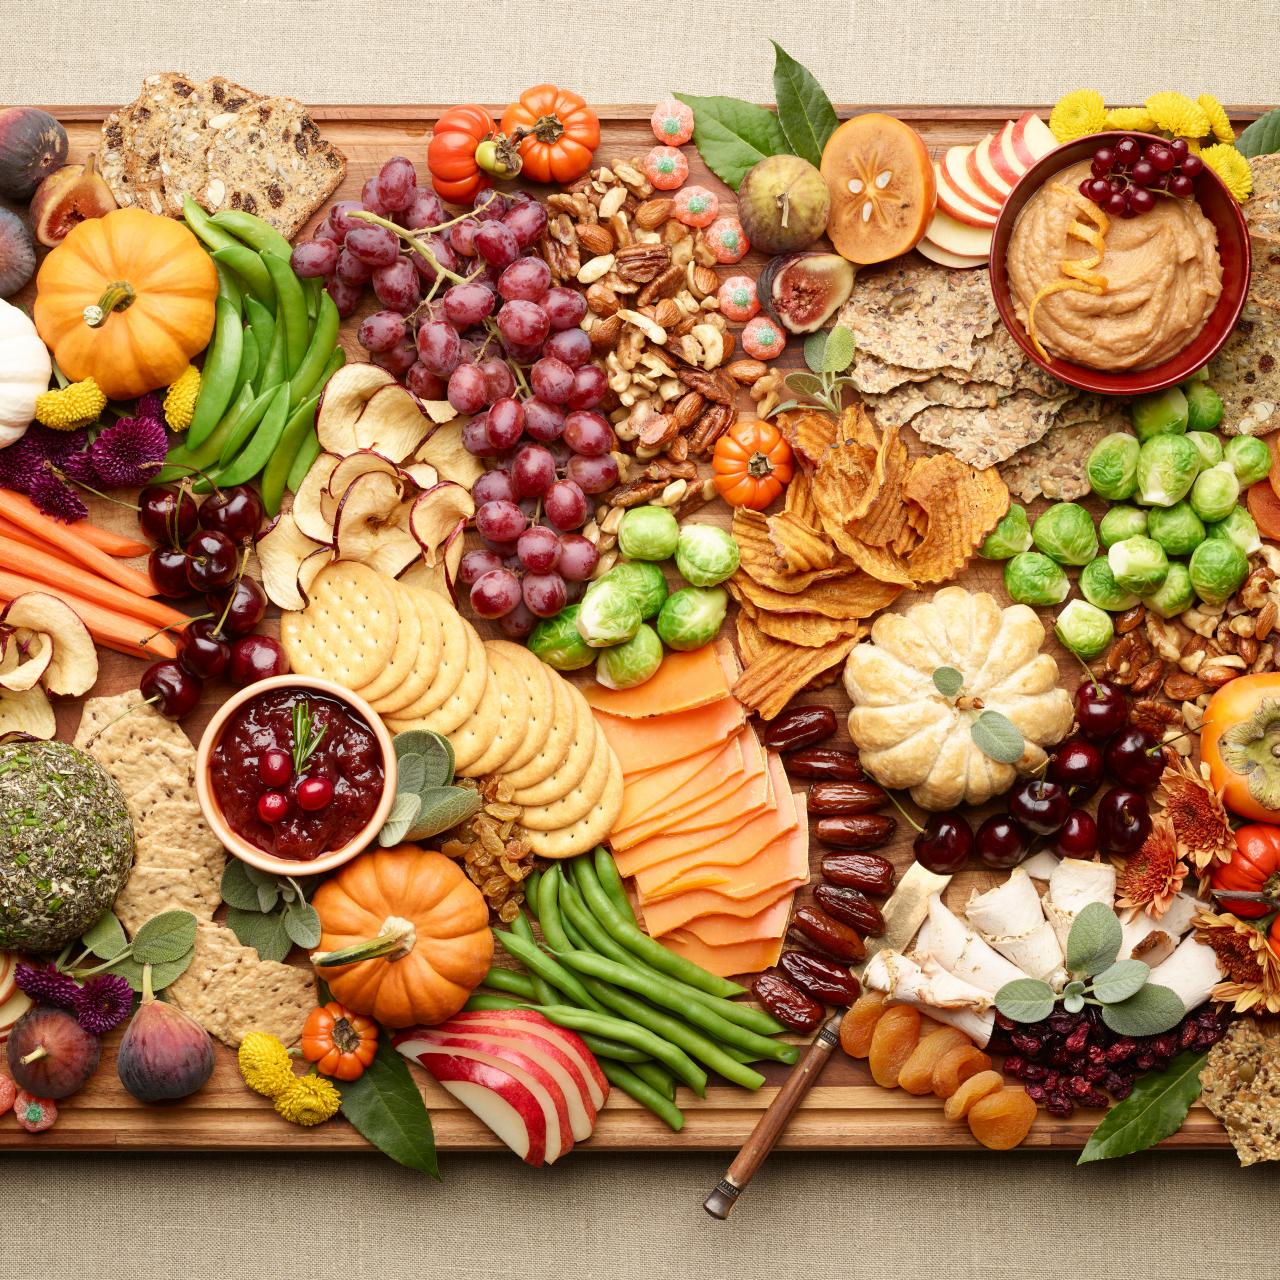 Best 69 Last-Minute Appetizer Ideas - Easy Thanksgiving App Recipes